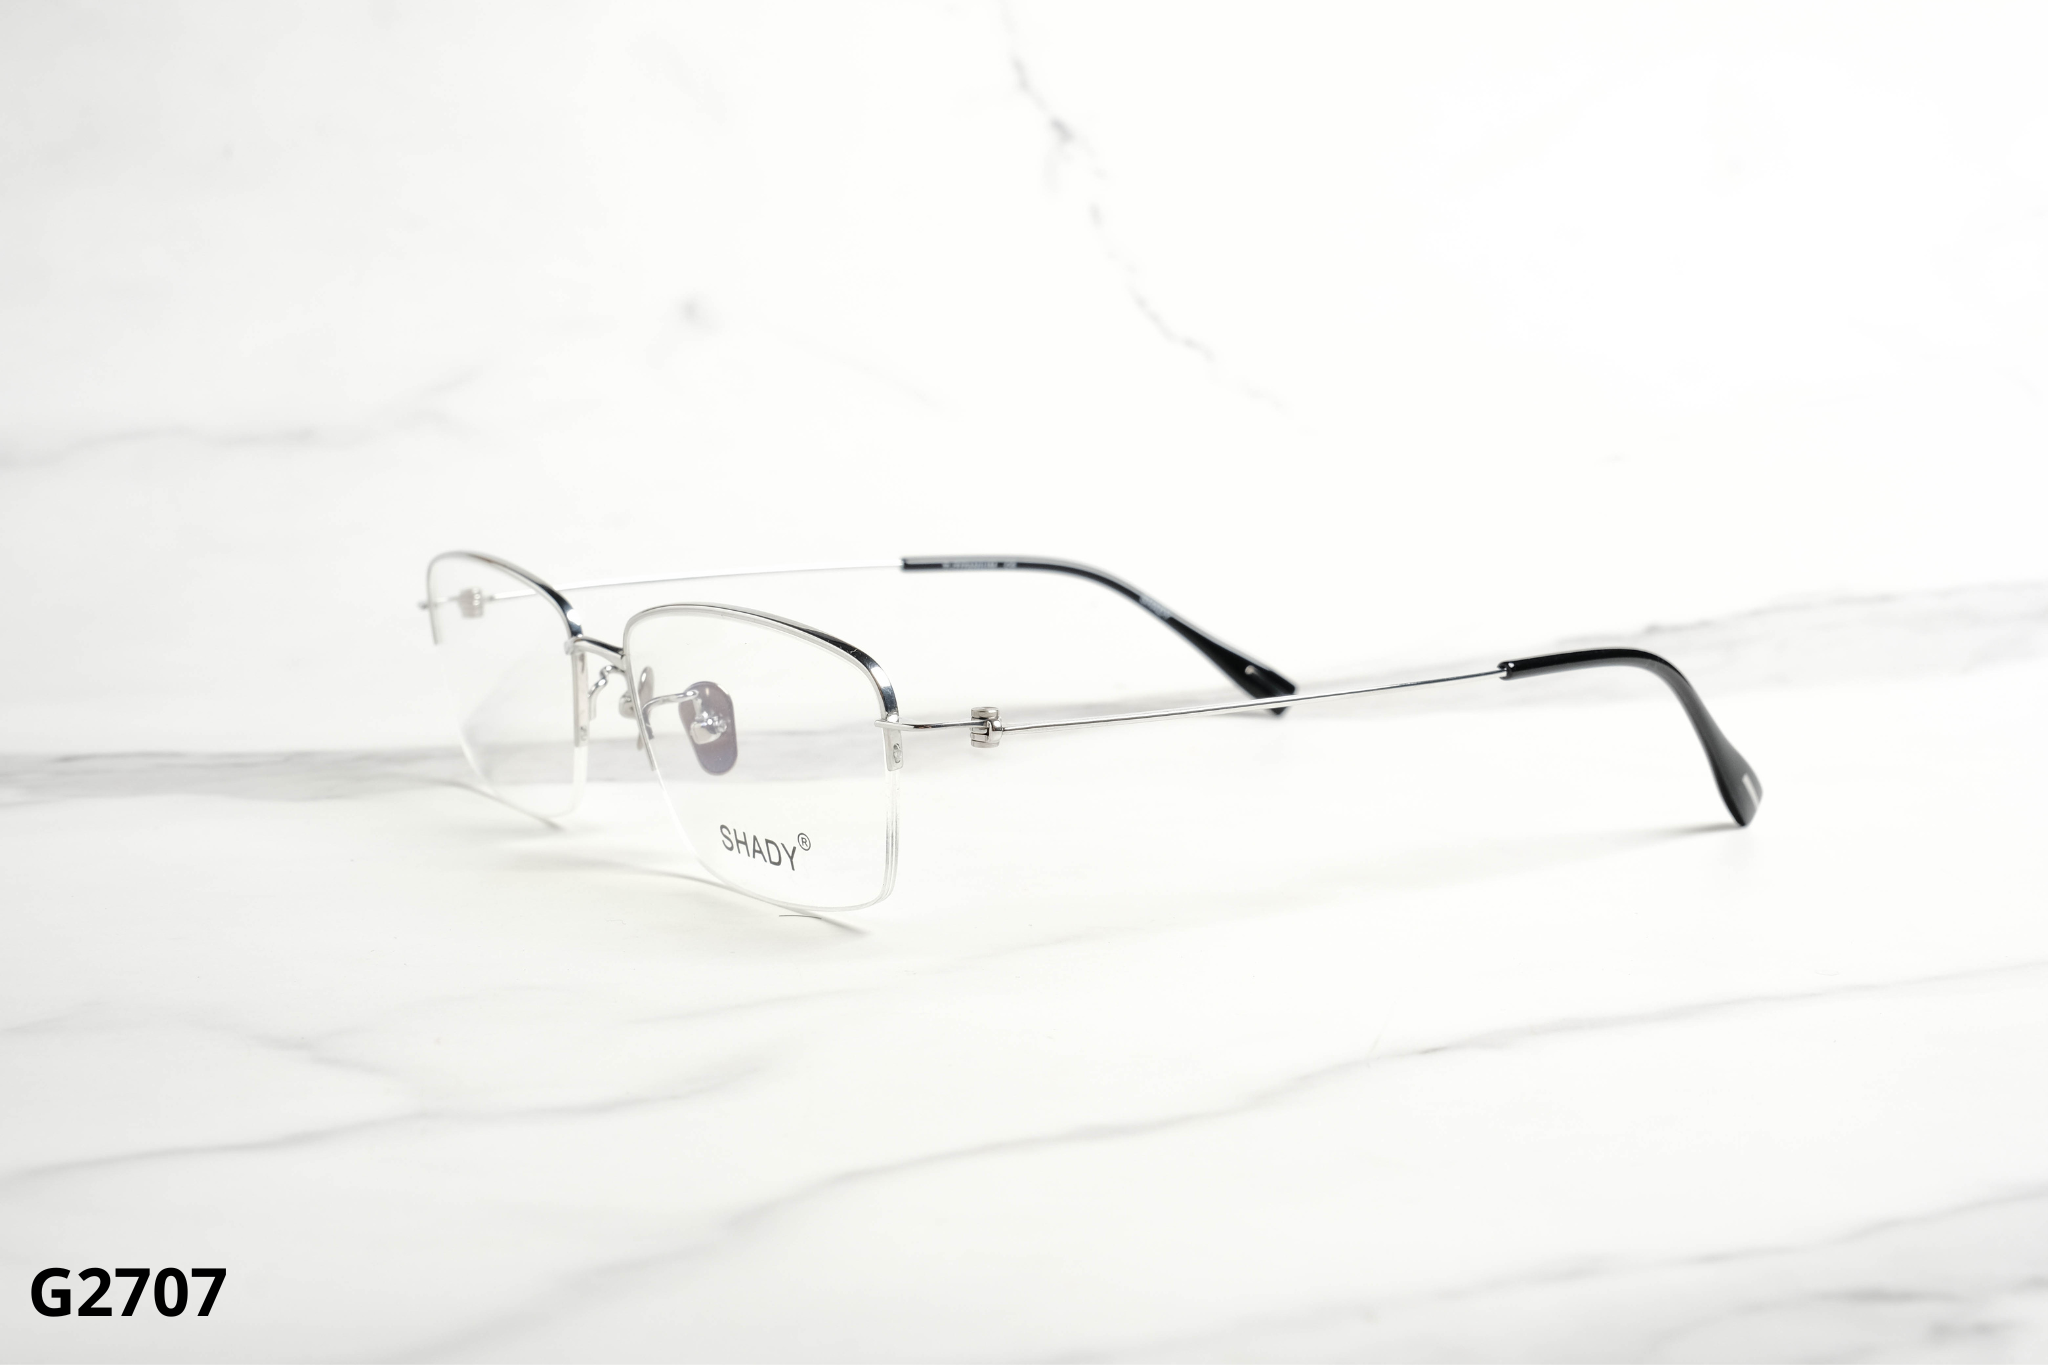  SHADY Eyewear - Glasses - G2707 